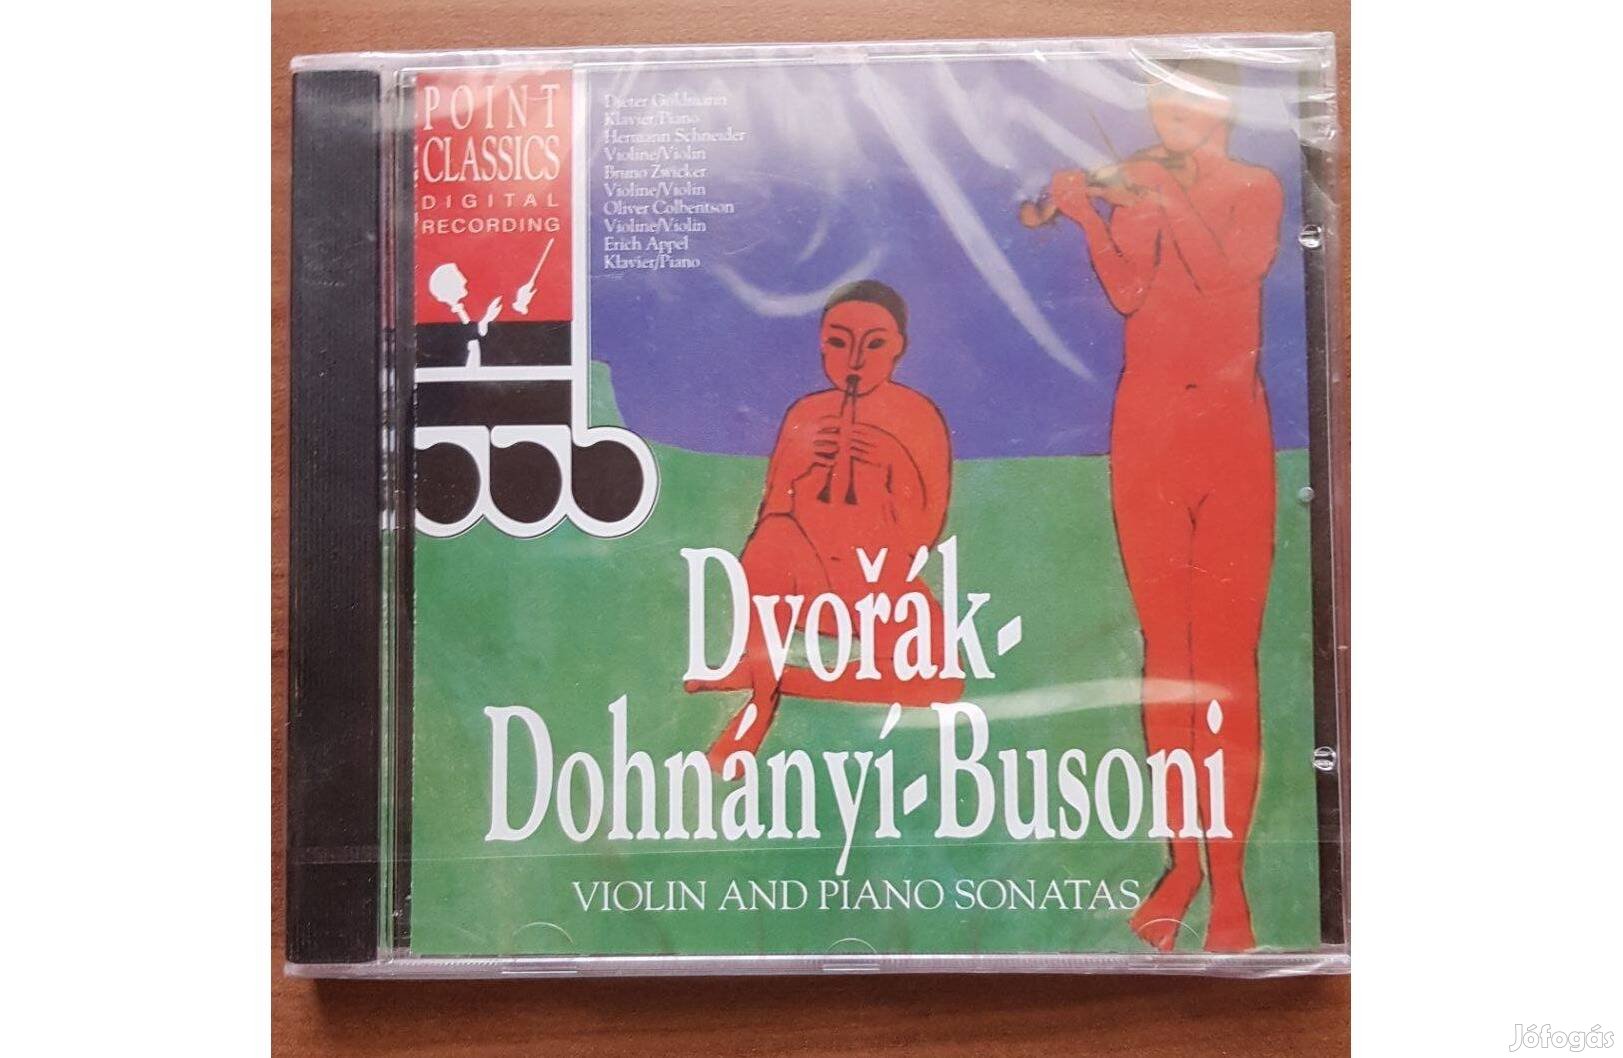 Dvorak - Dohnanyi - Busoni / Violin And Piano Sonatas (Bontatlan CD)